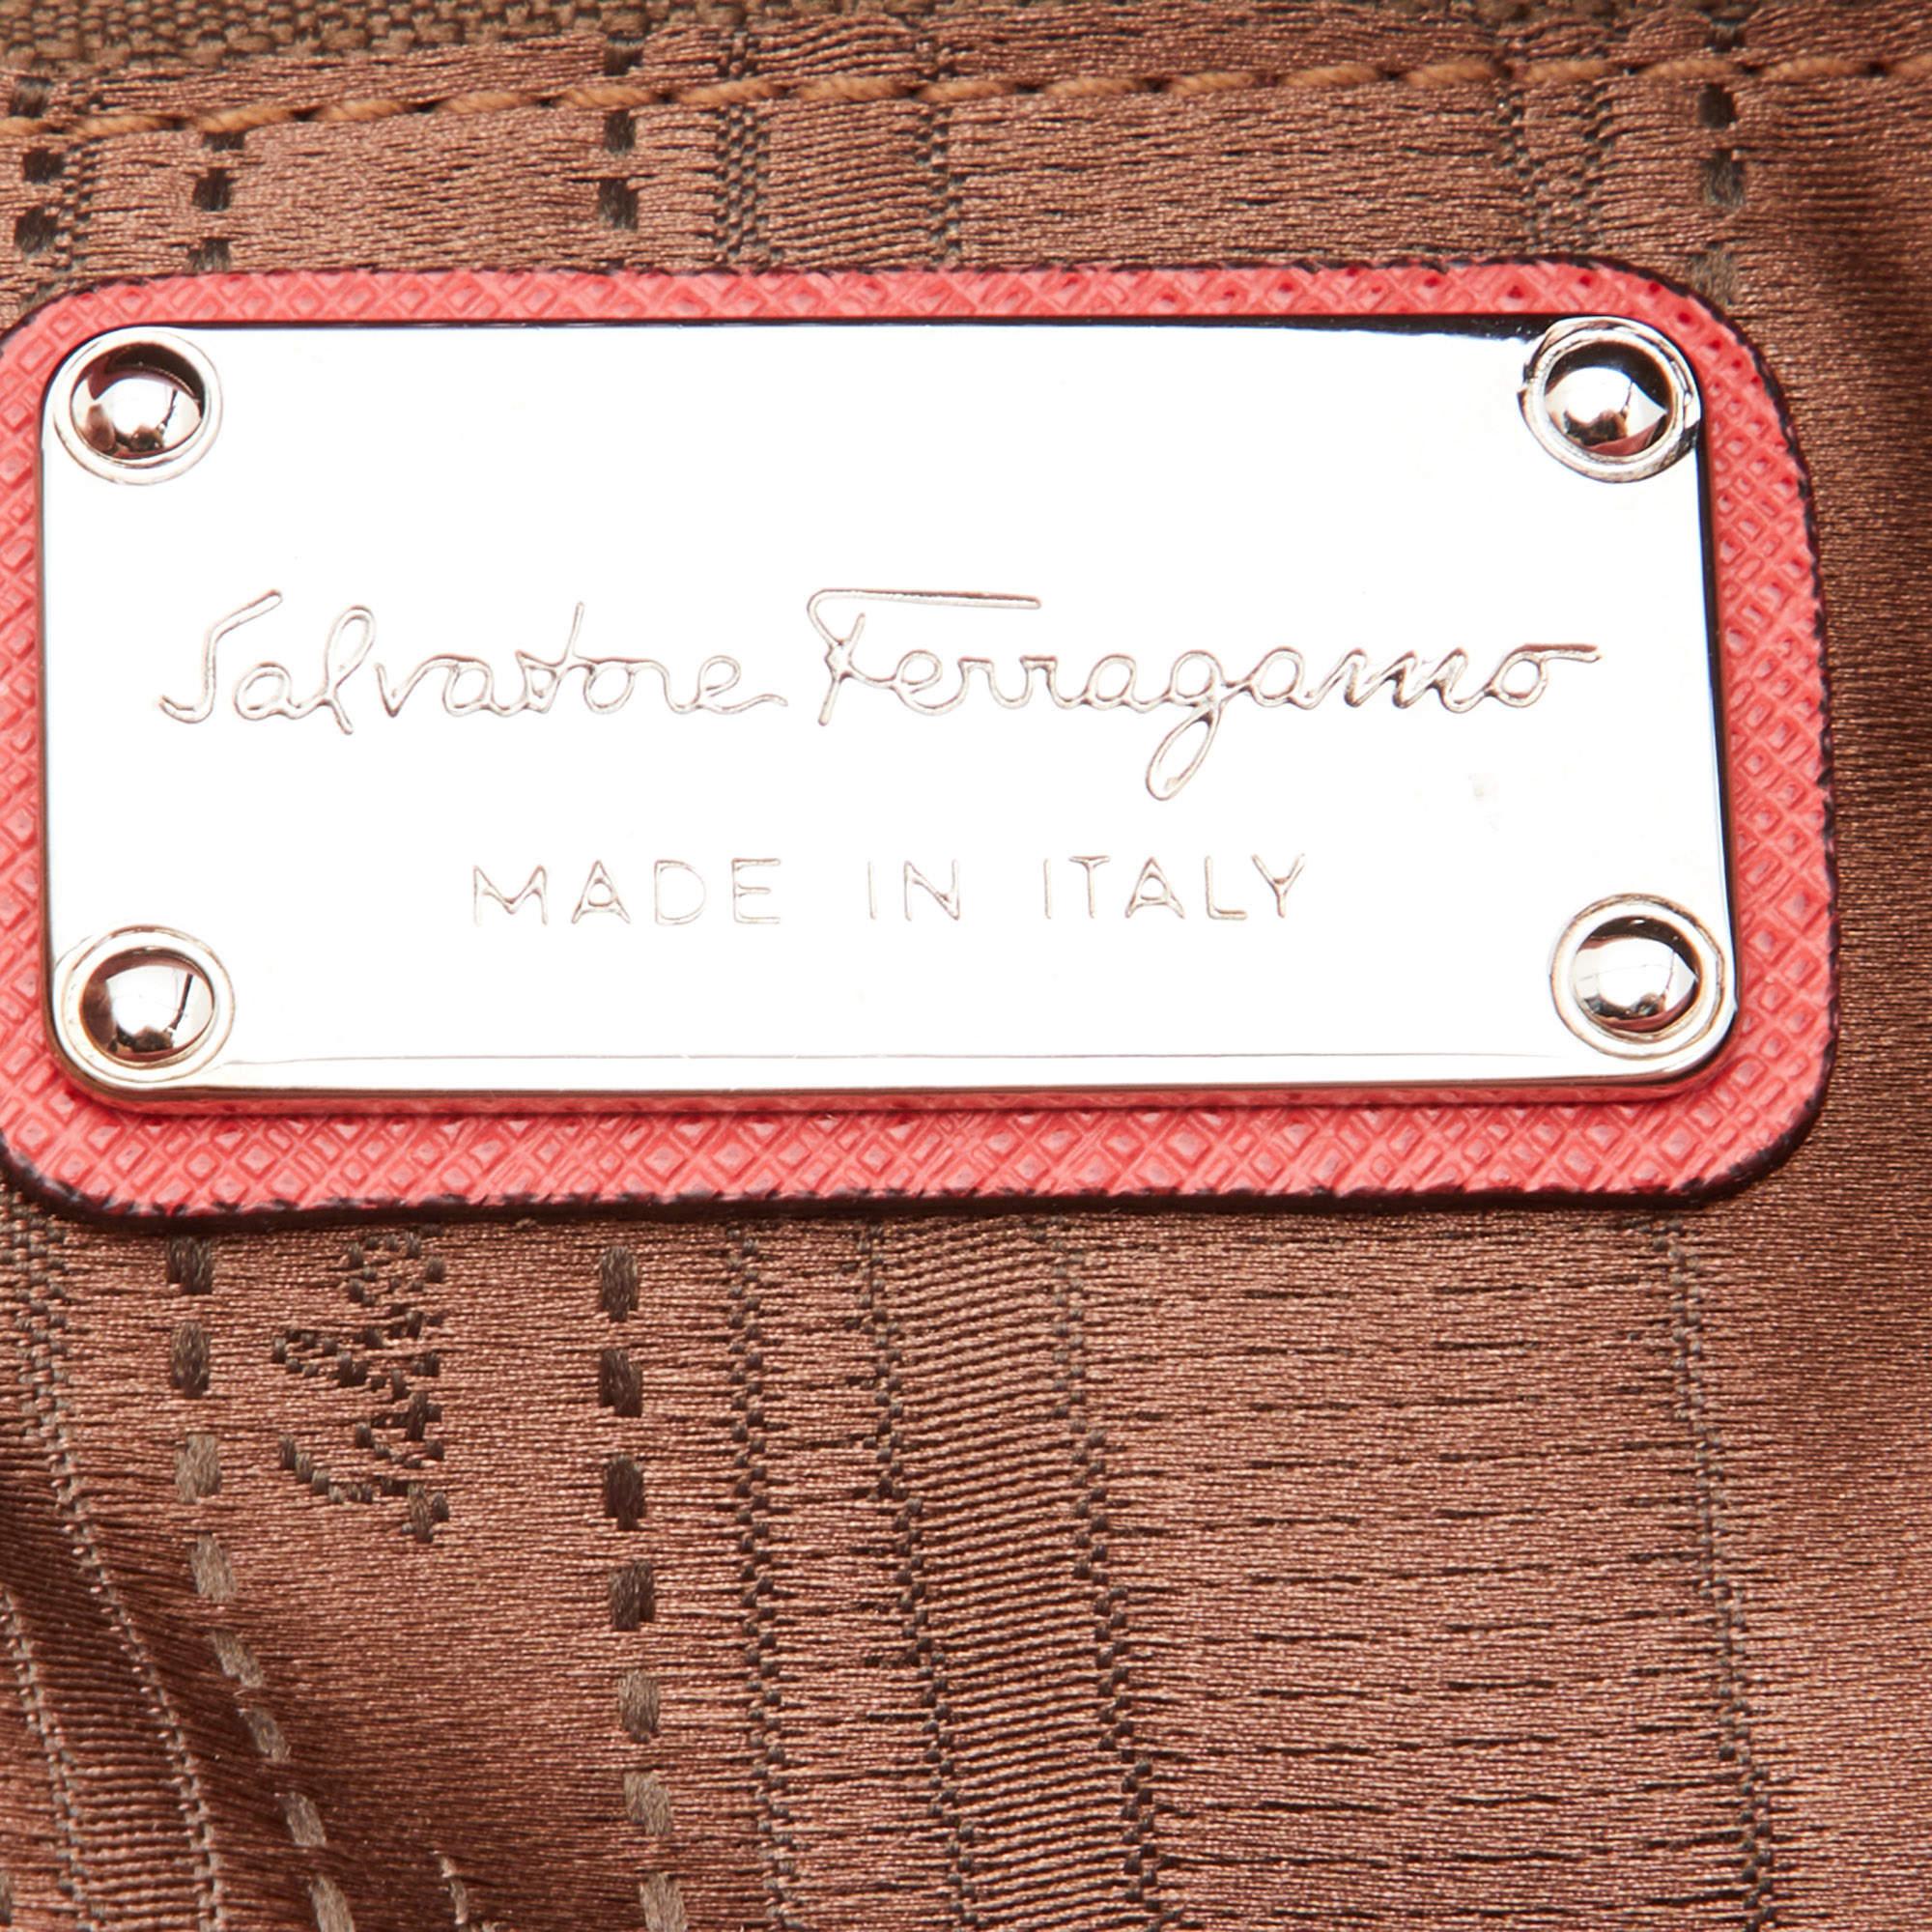 Salvatore Ferragamo Coral Orange Leather Gancio Bowler Bag 6